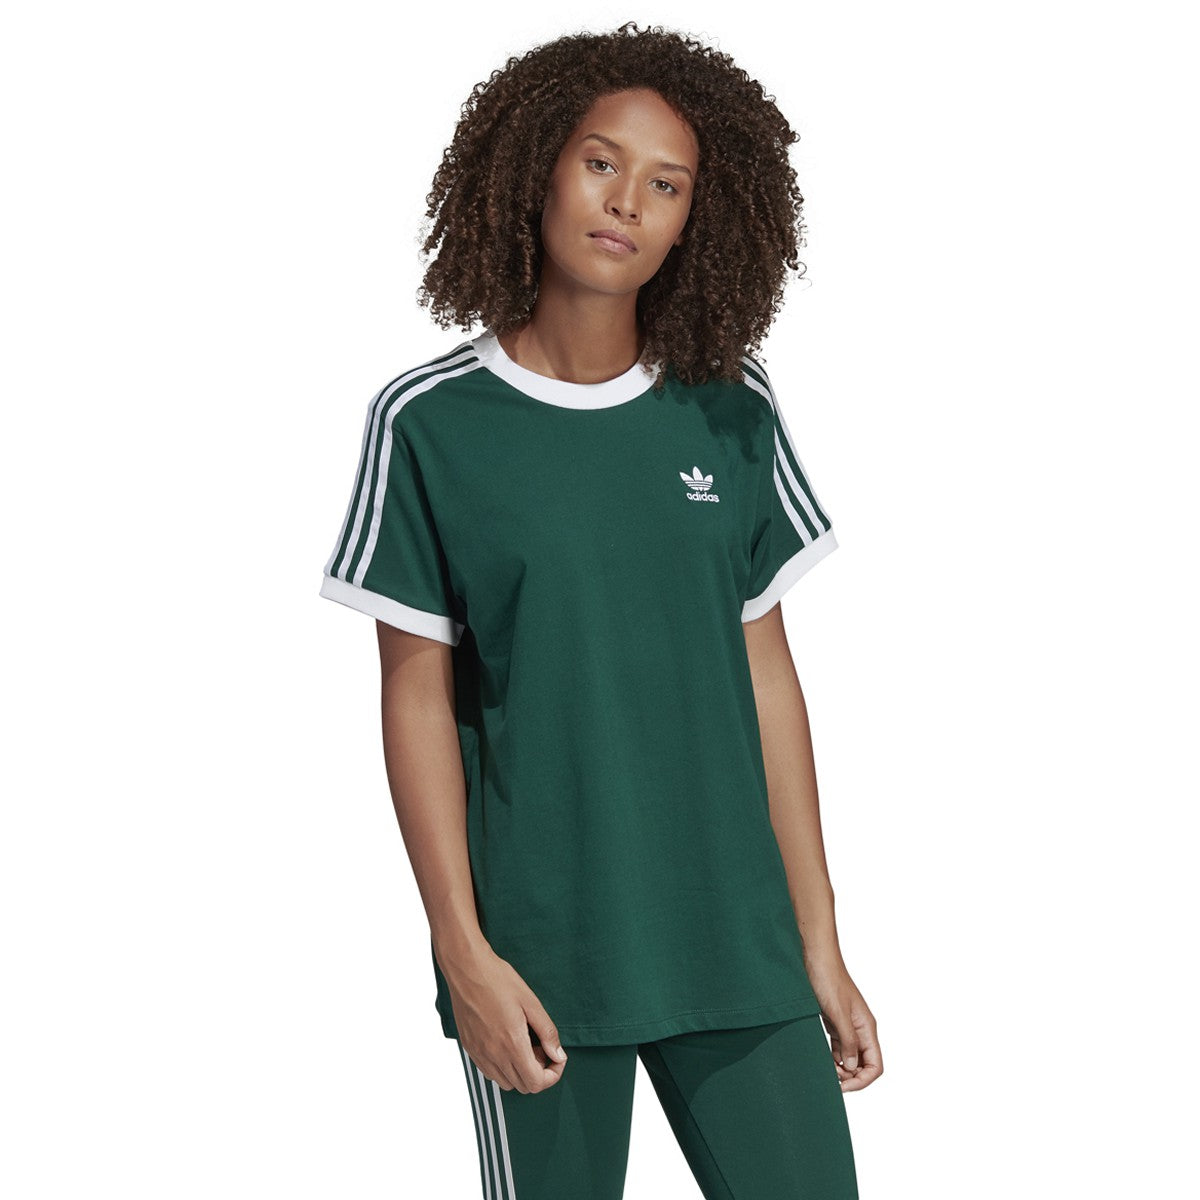 Adidas Women's 3 Stripes Tee Collegiate Green